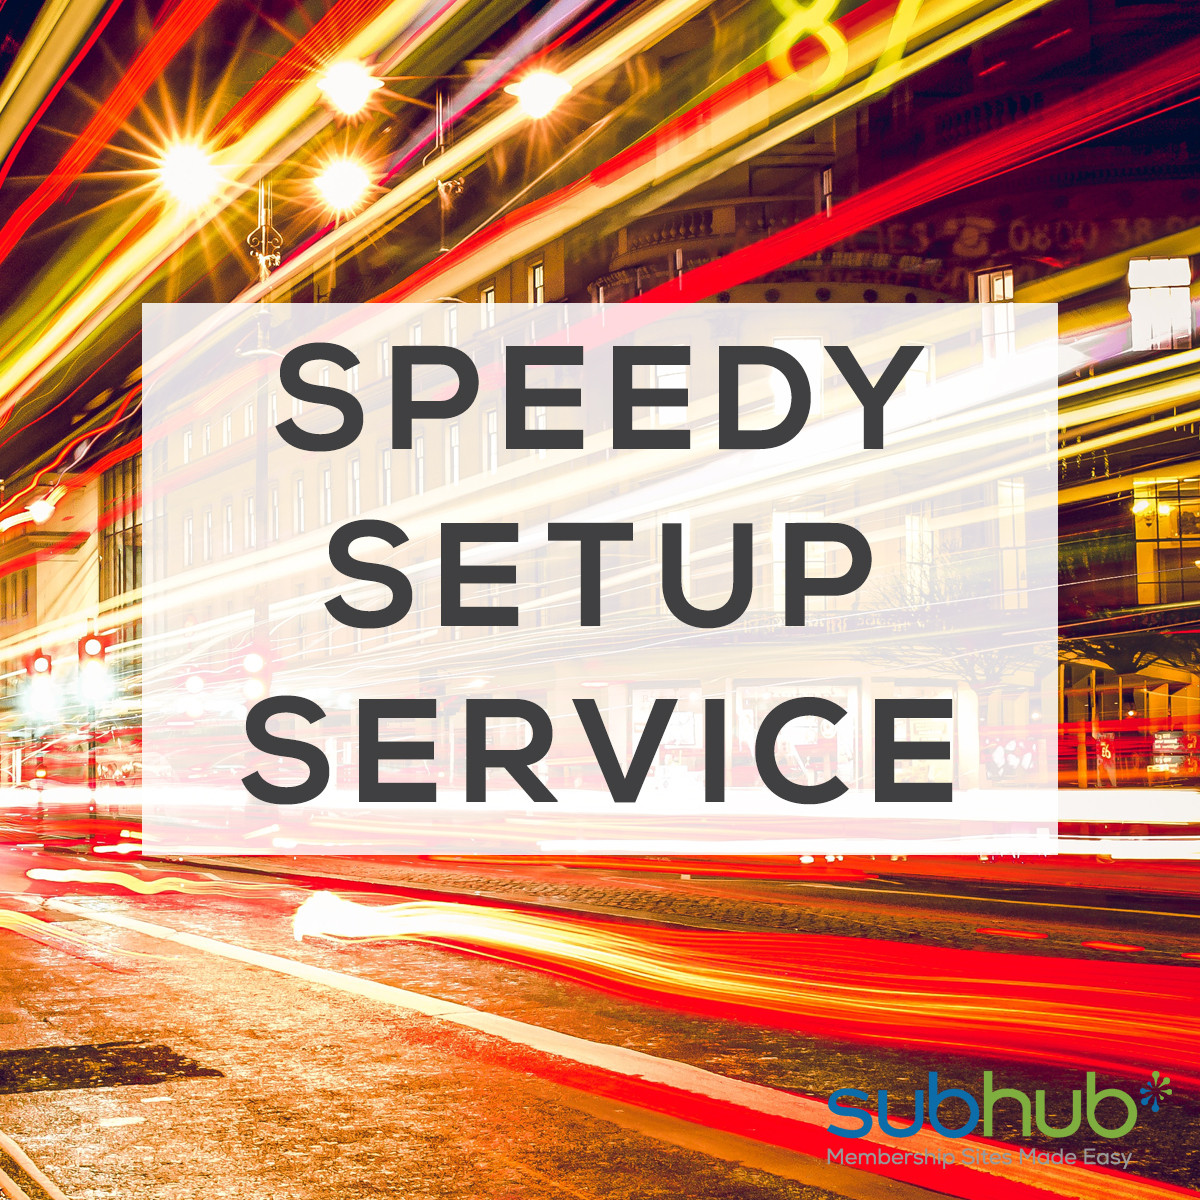 SubHub Speedy Set Up Service